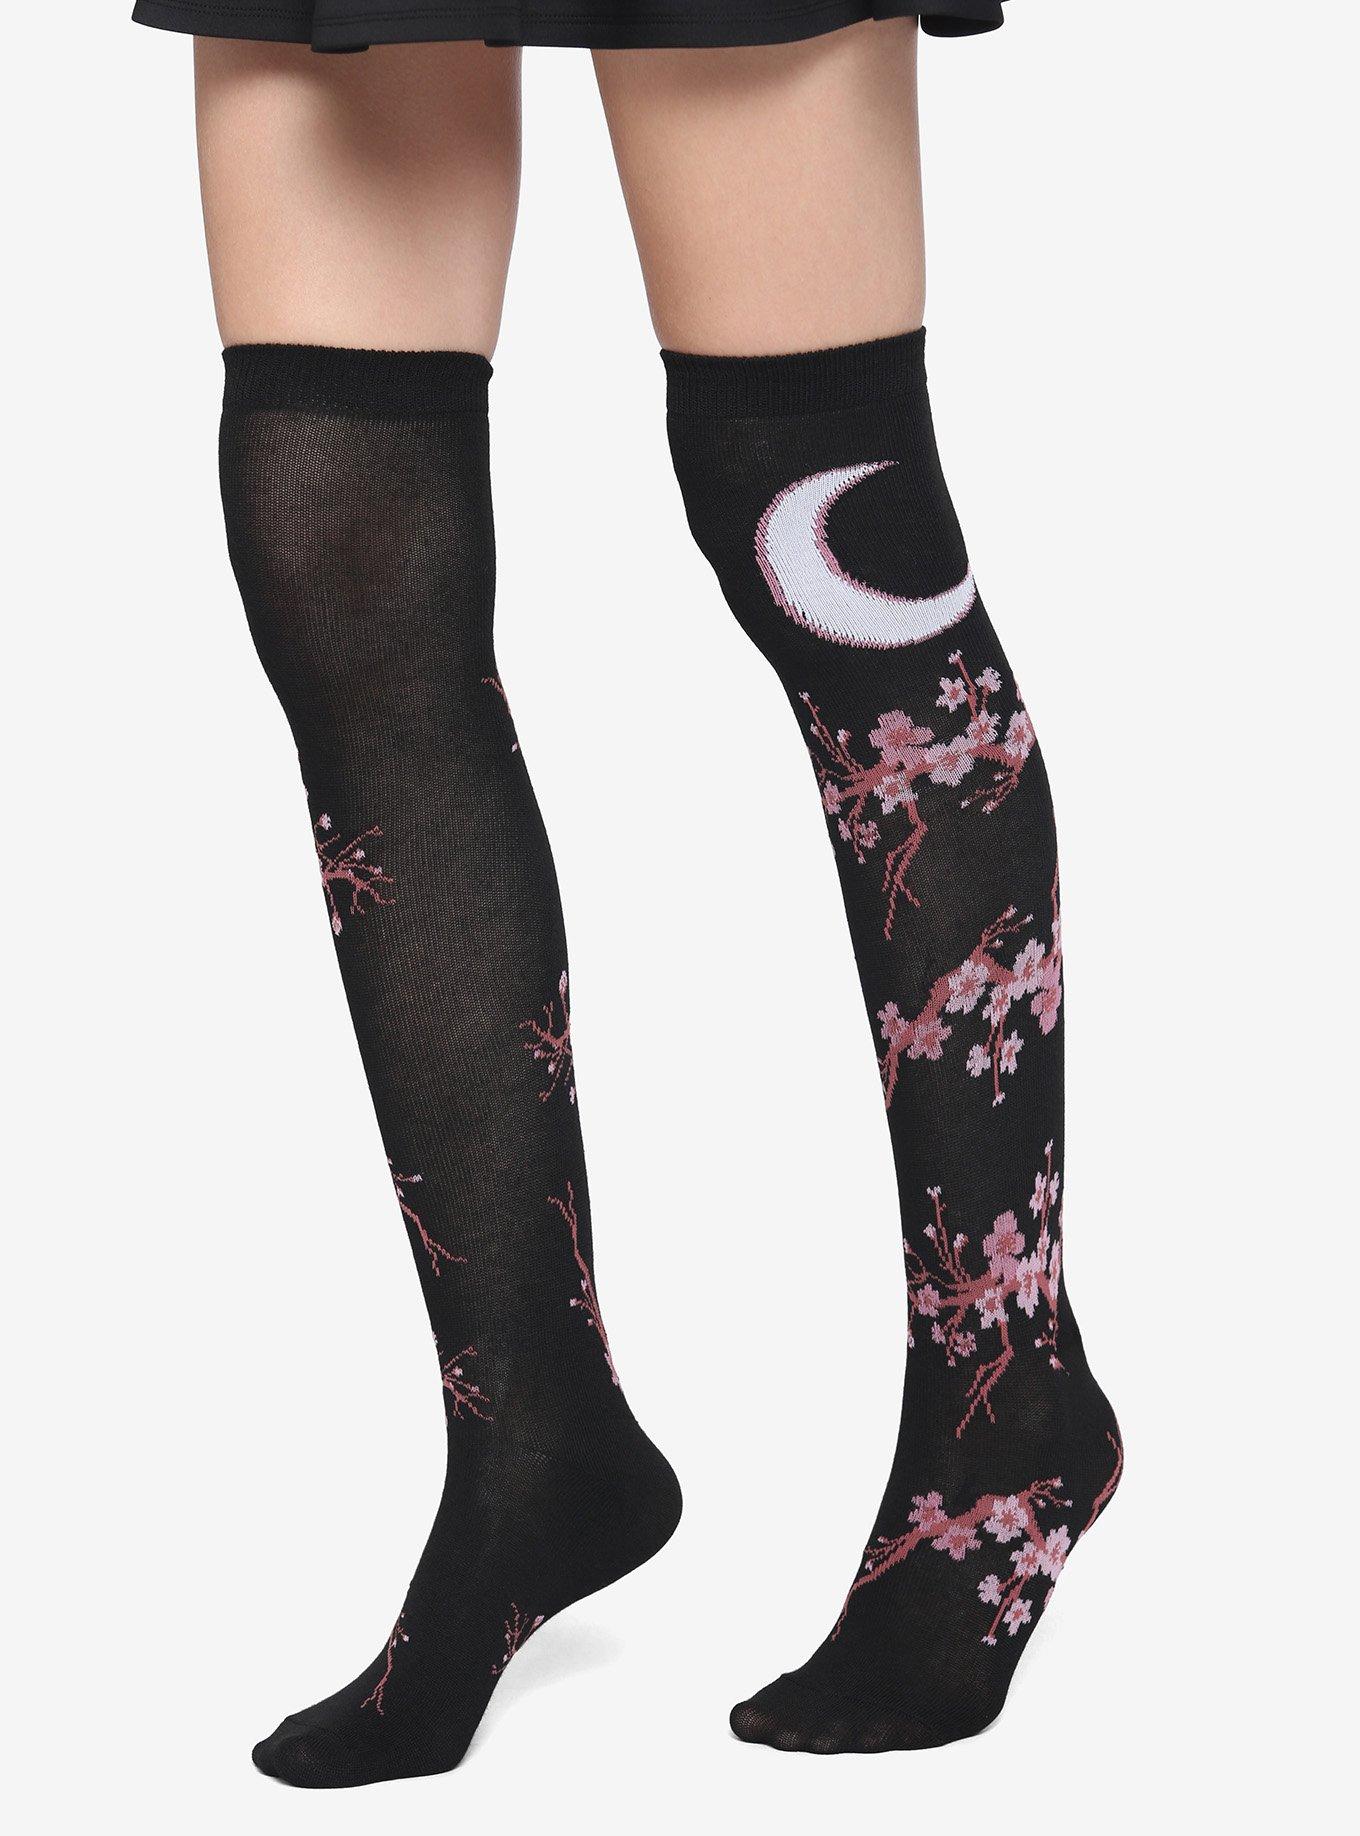 Moon Cherry Blossom Black Knee-High Socks, , hi-res